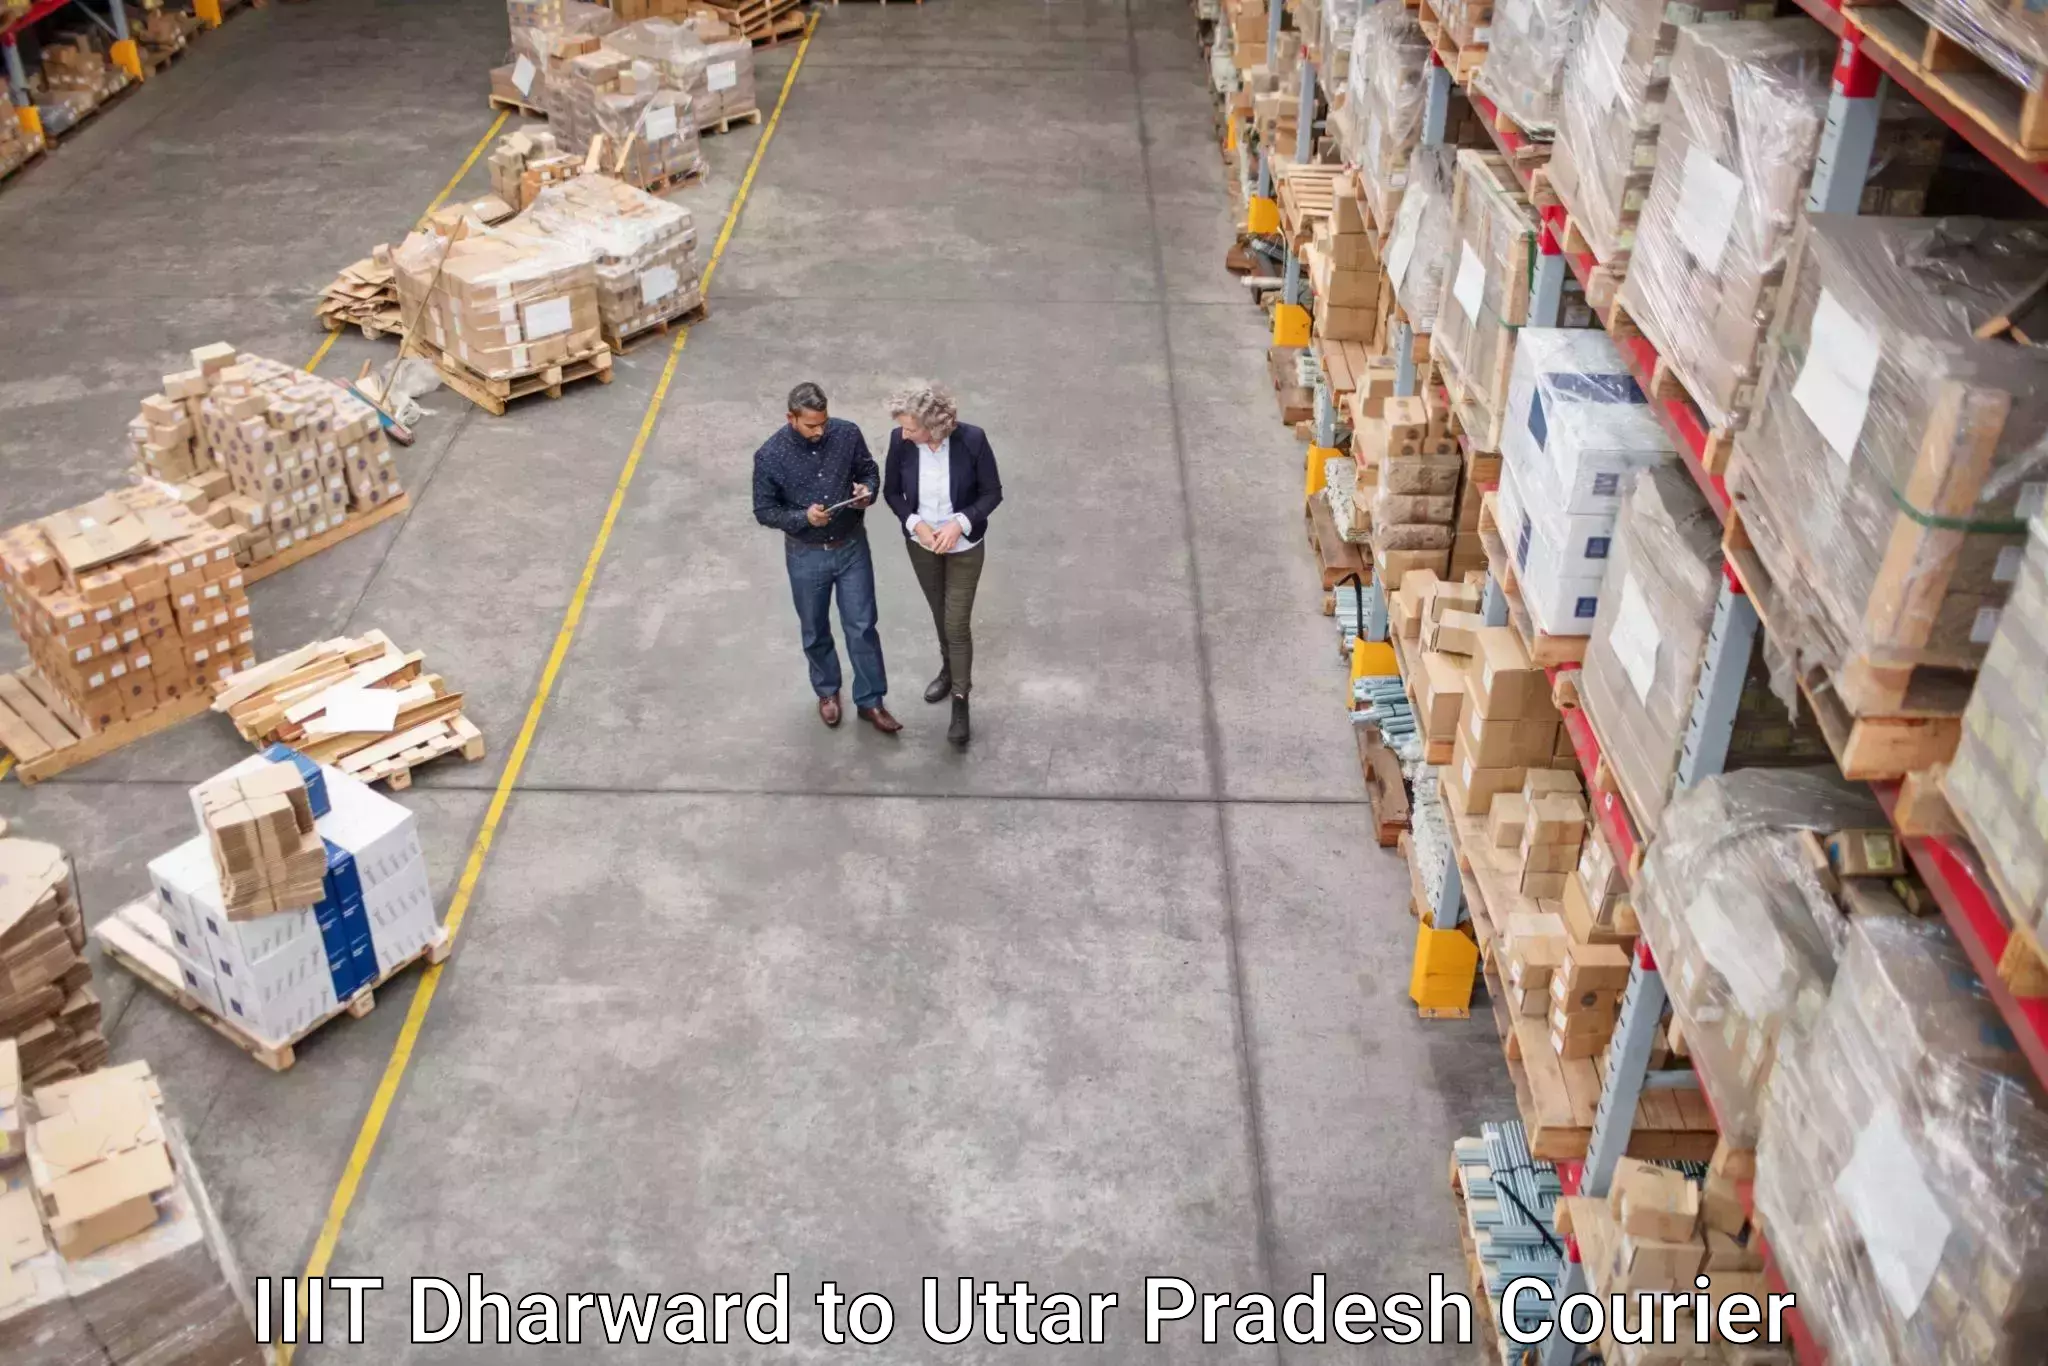 Courier rate comparison in IIIT Dharward to Uttar Pradesh